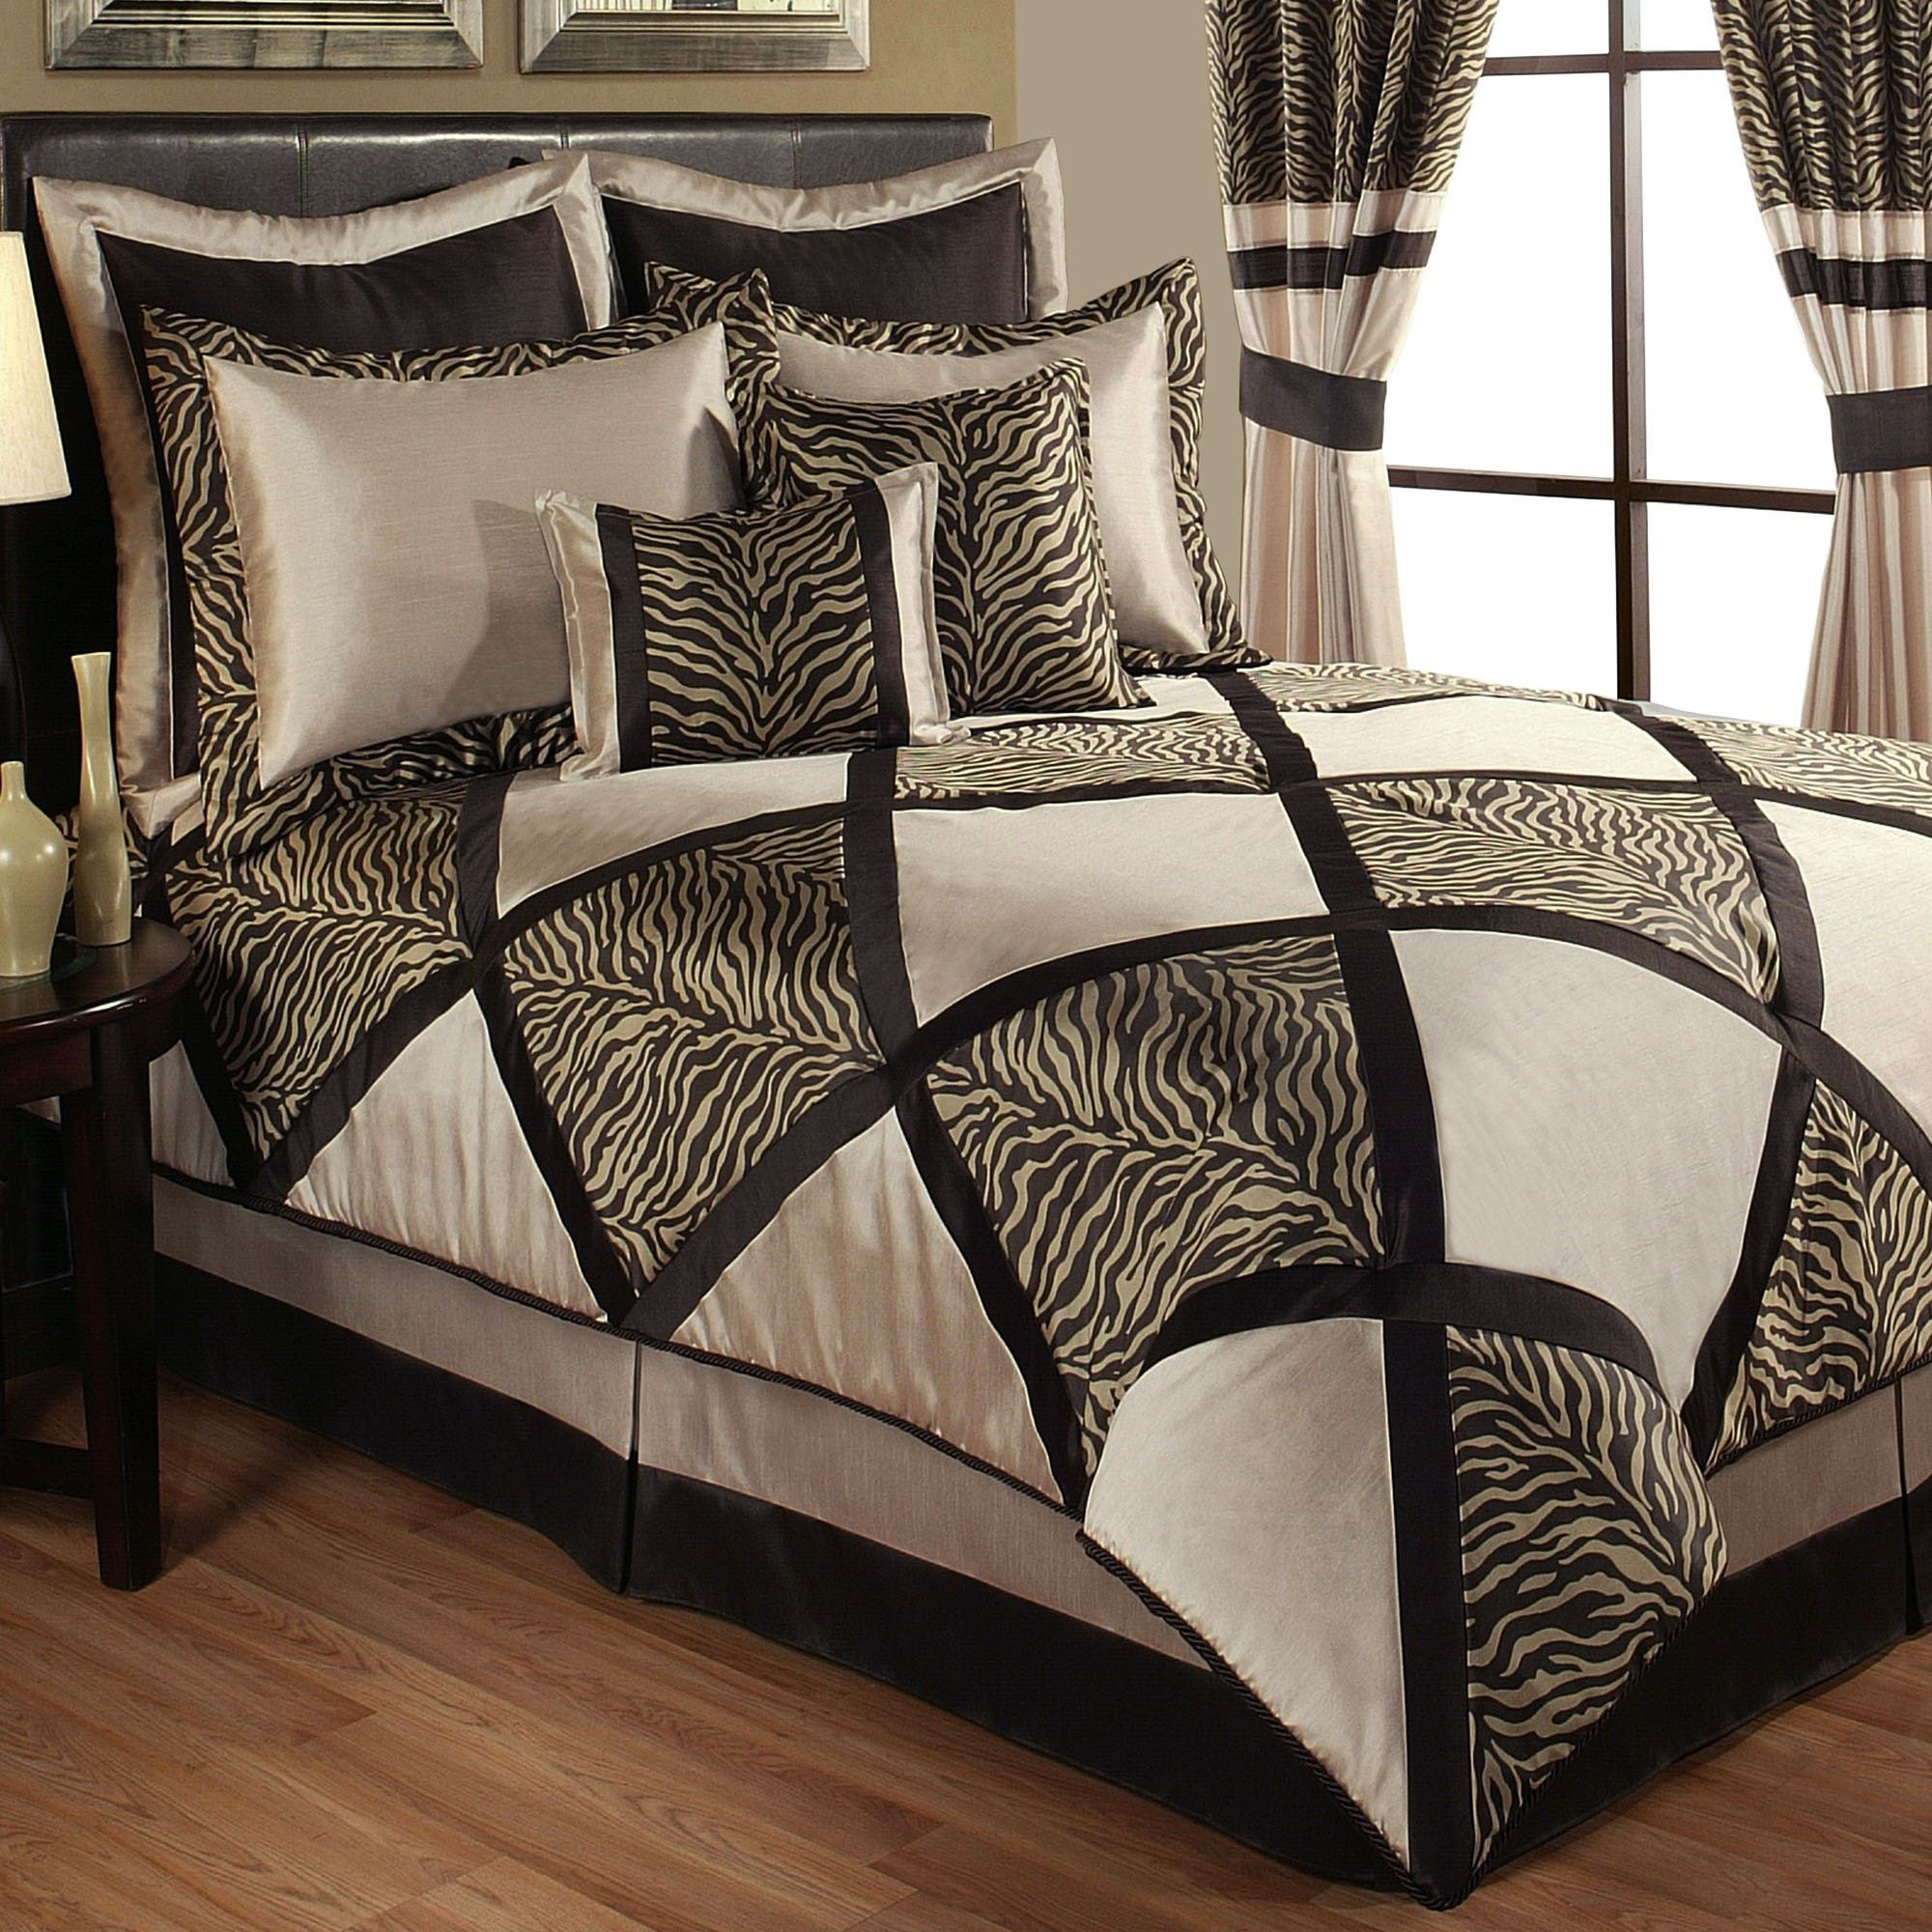 True Safari Zebra Print Comforter Bedding within measurements 2000 X 2000